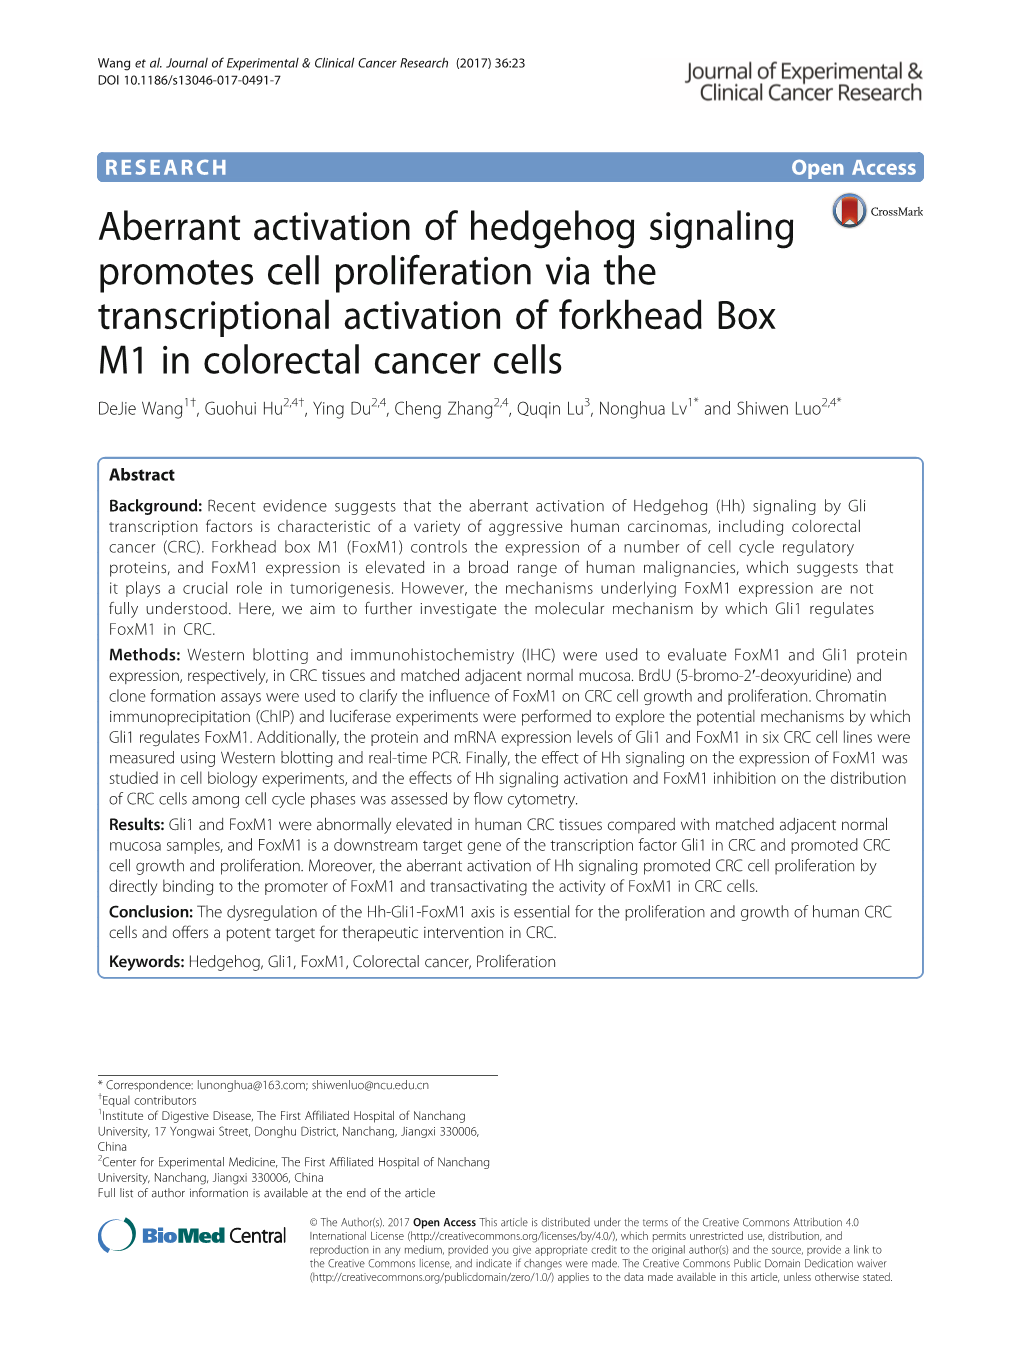 Aberrant Activation of Hedgehog Signaling Promotes Cell Proliferation